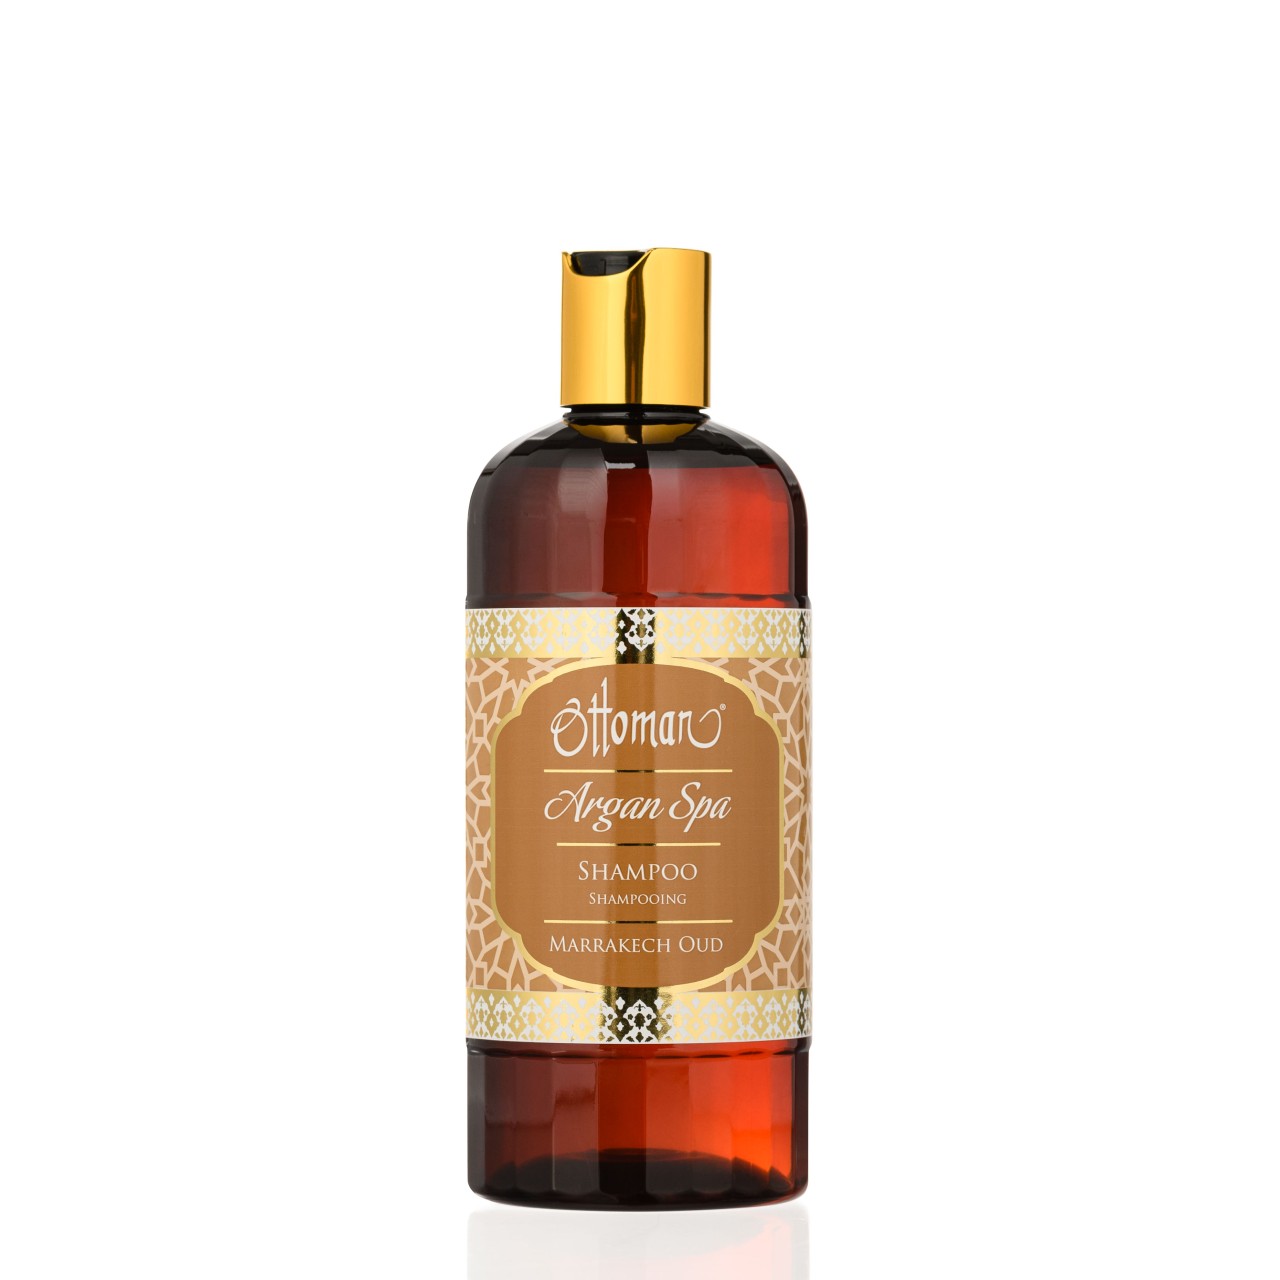 Marrakech Oud Argan Spa Shampoo 400ml